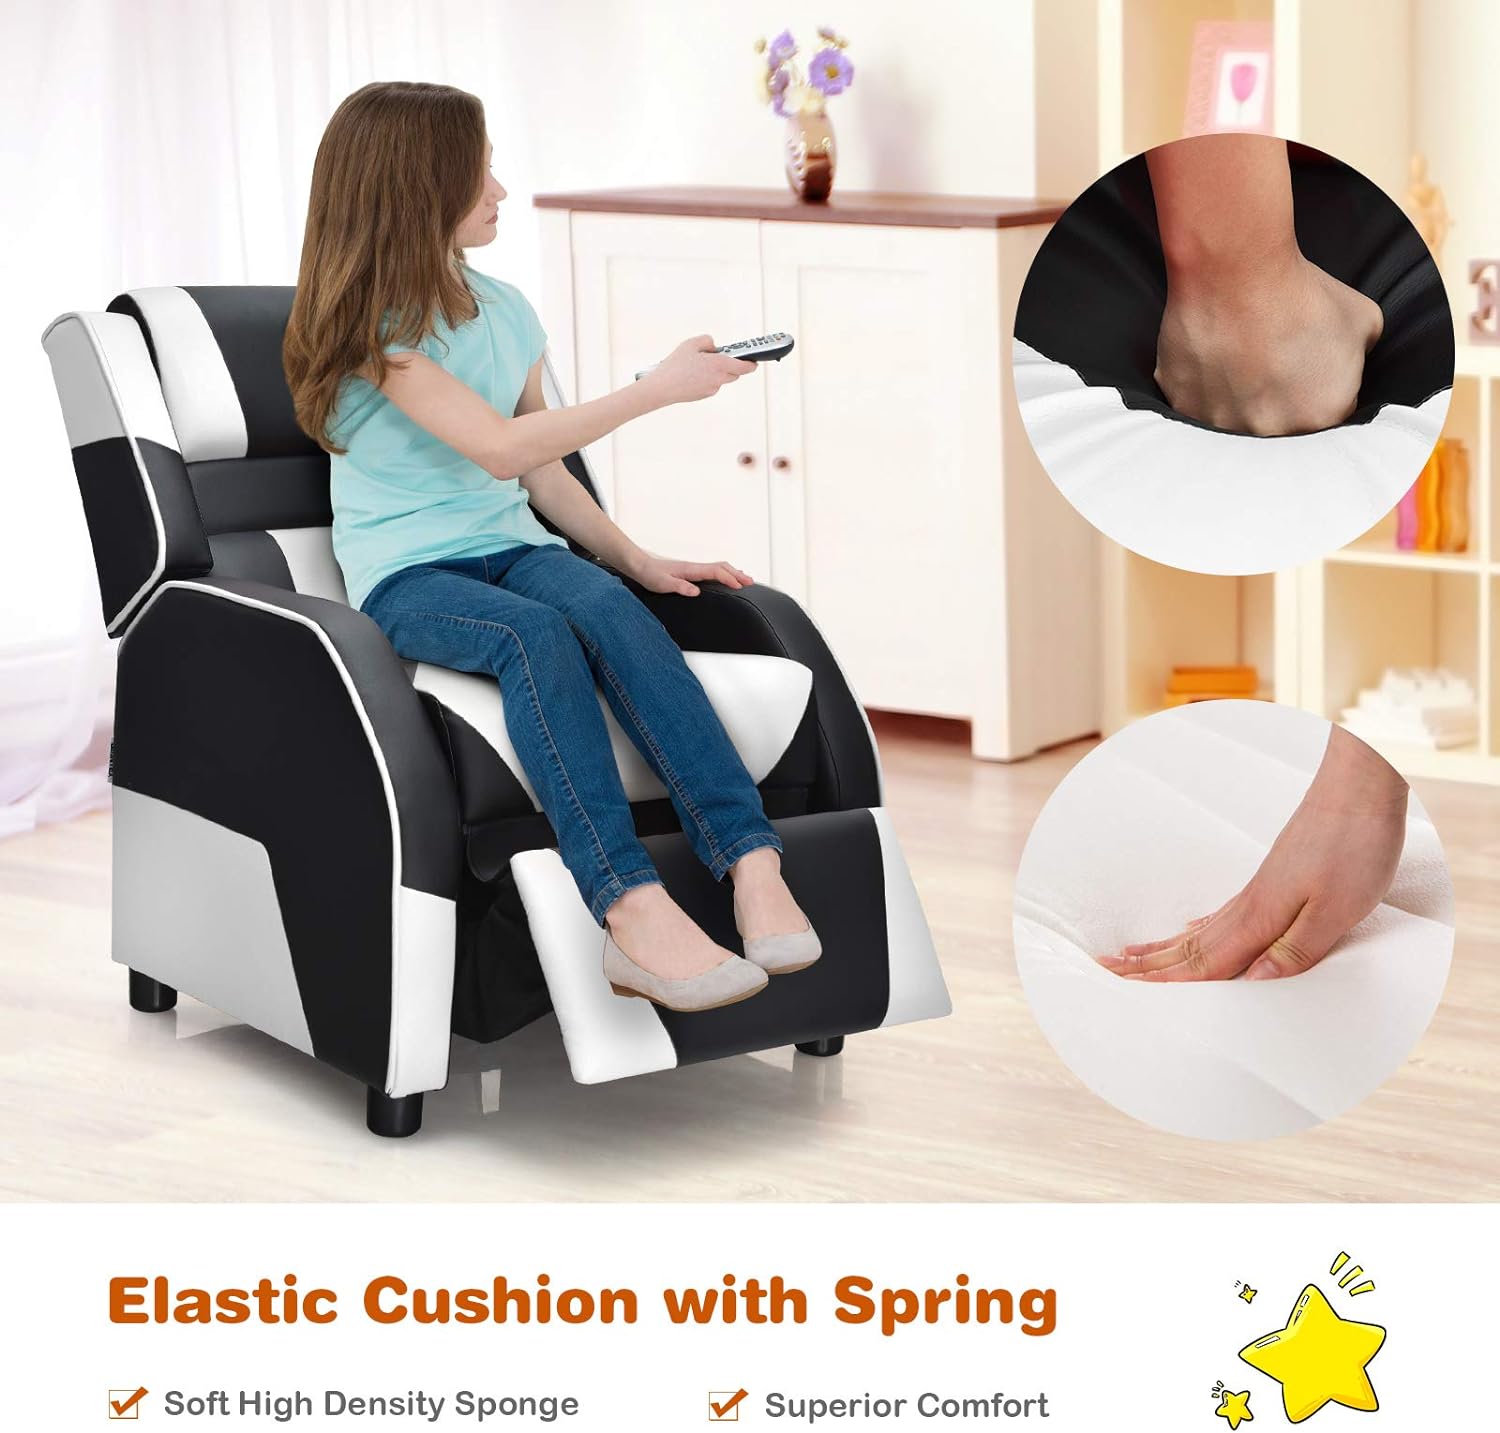 Silla reclinable para niños, silla reclinable para juegos con reposapiés,